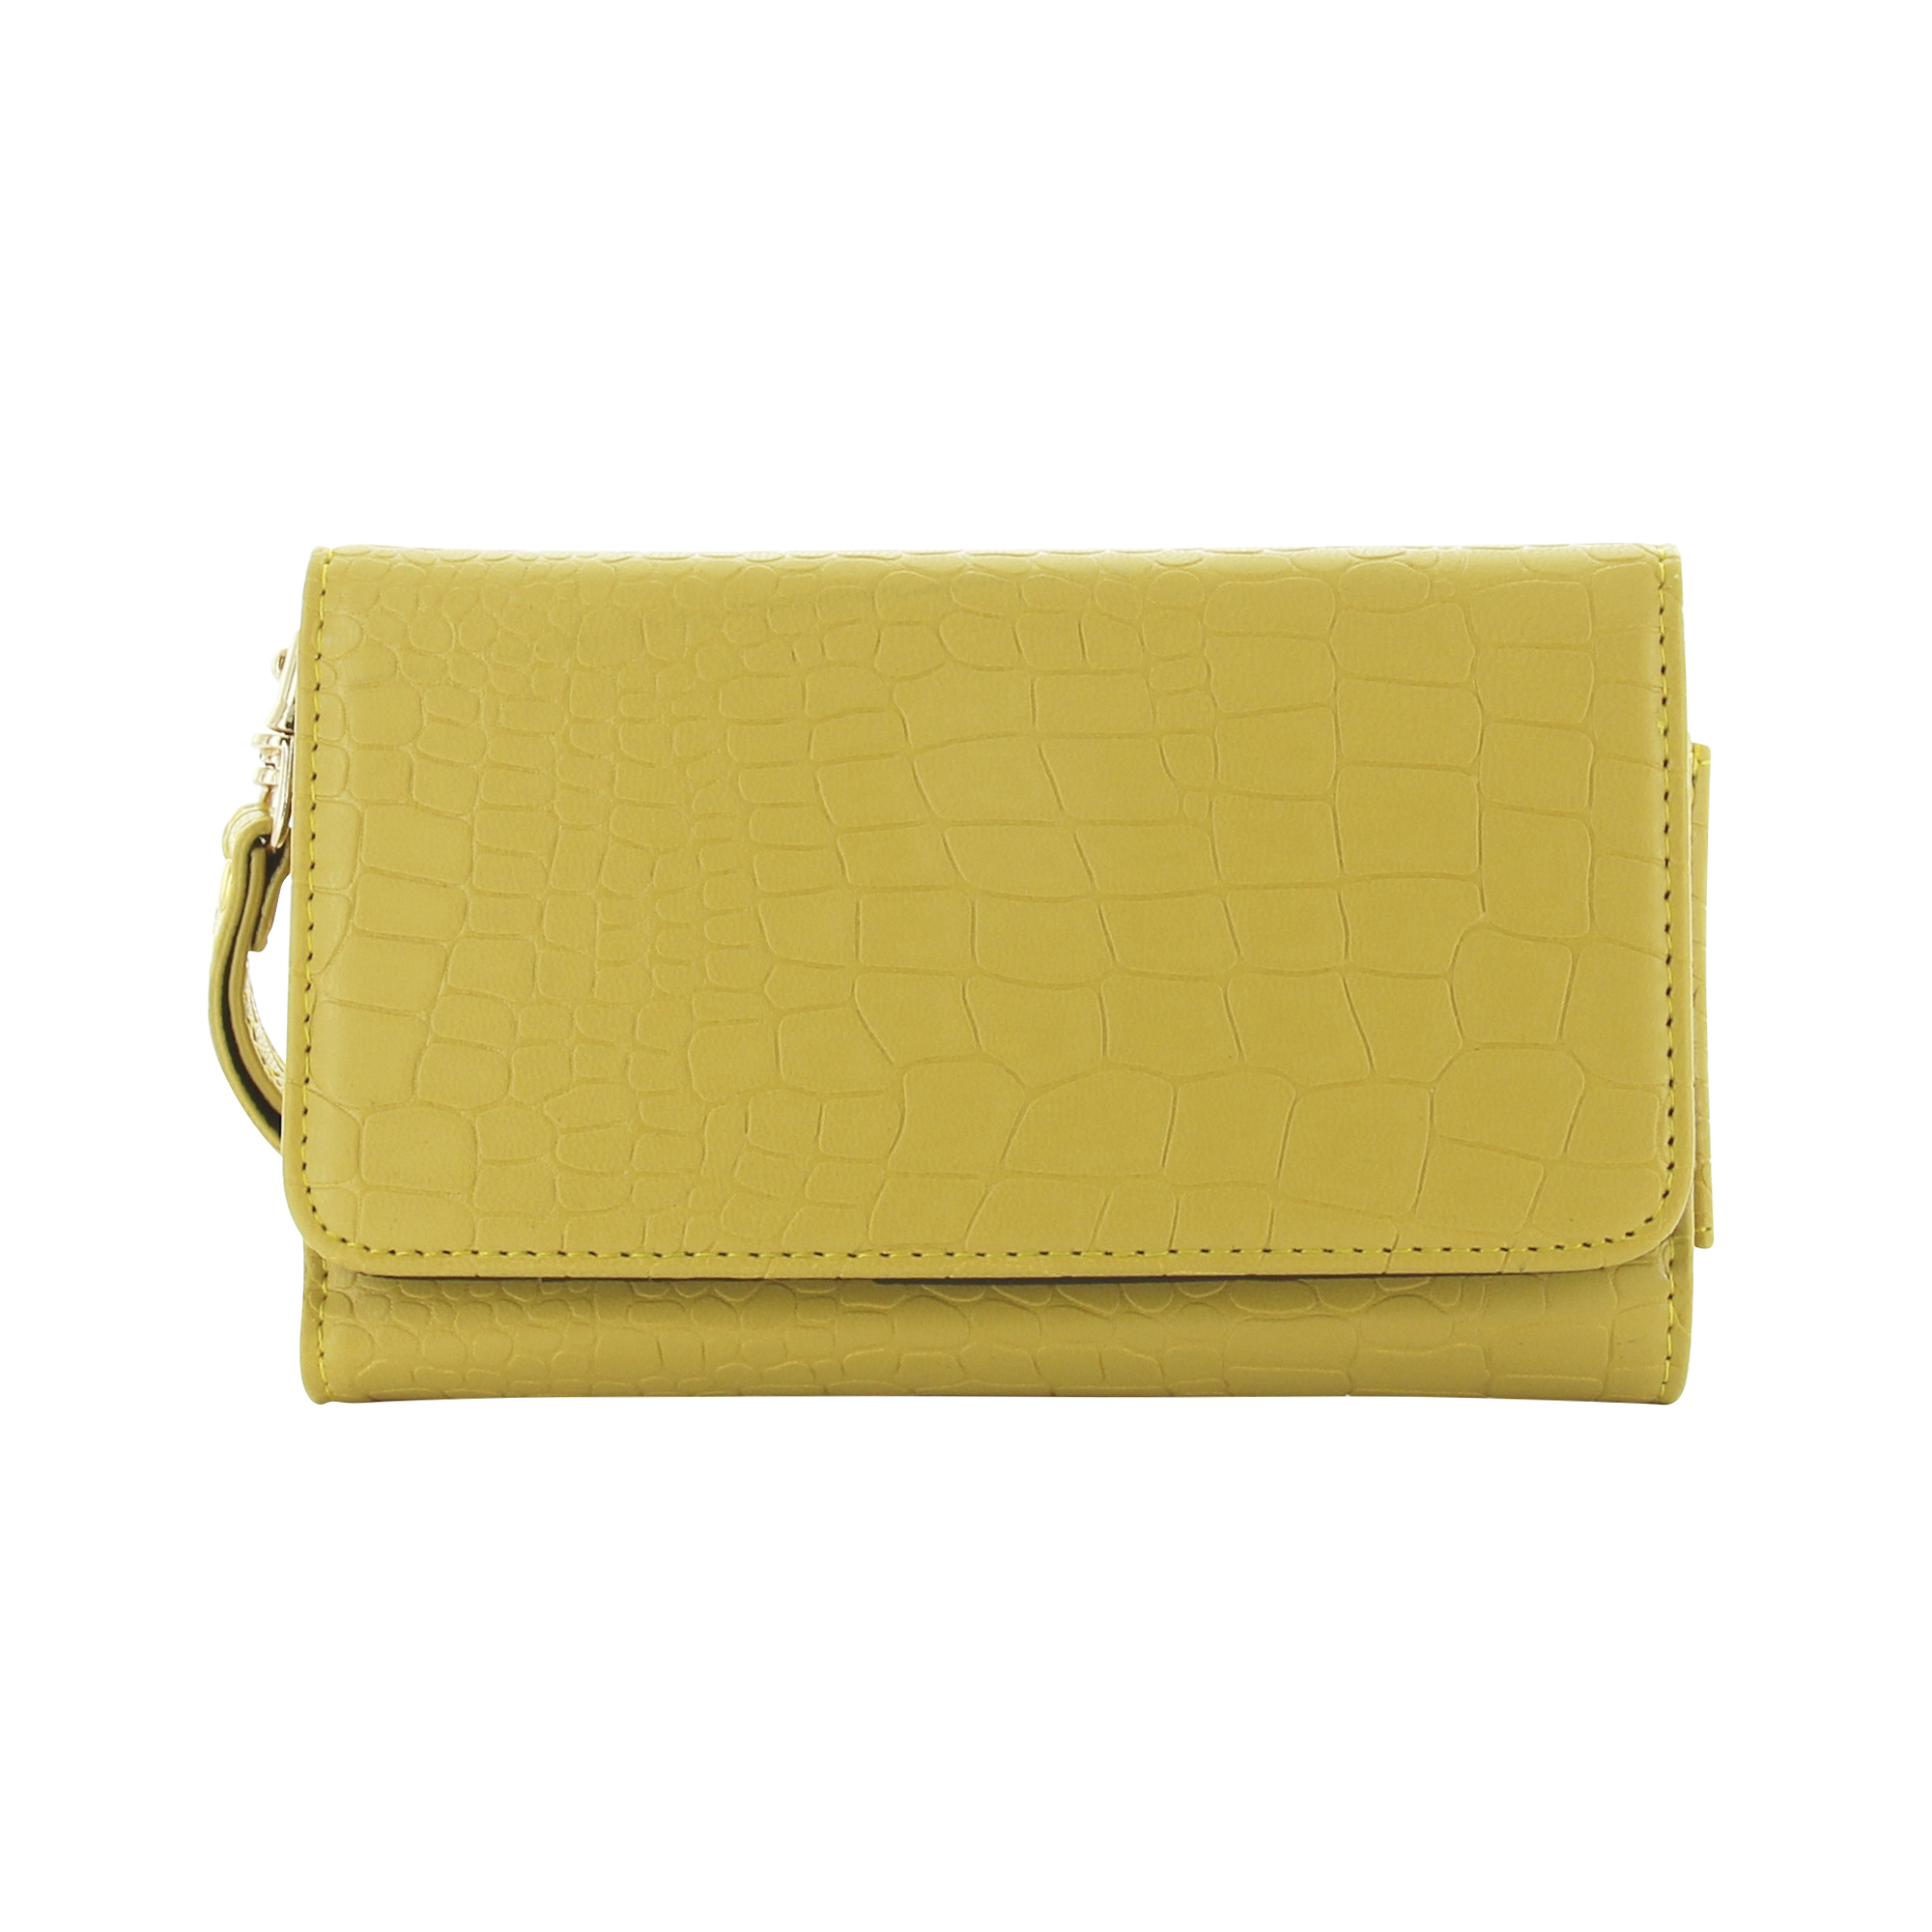 Universal phone purse, yellow croc